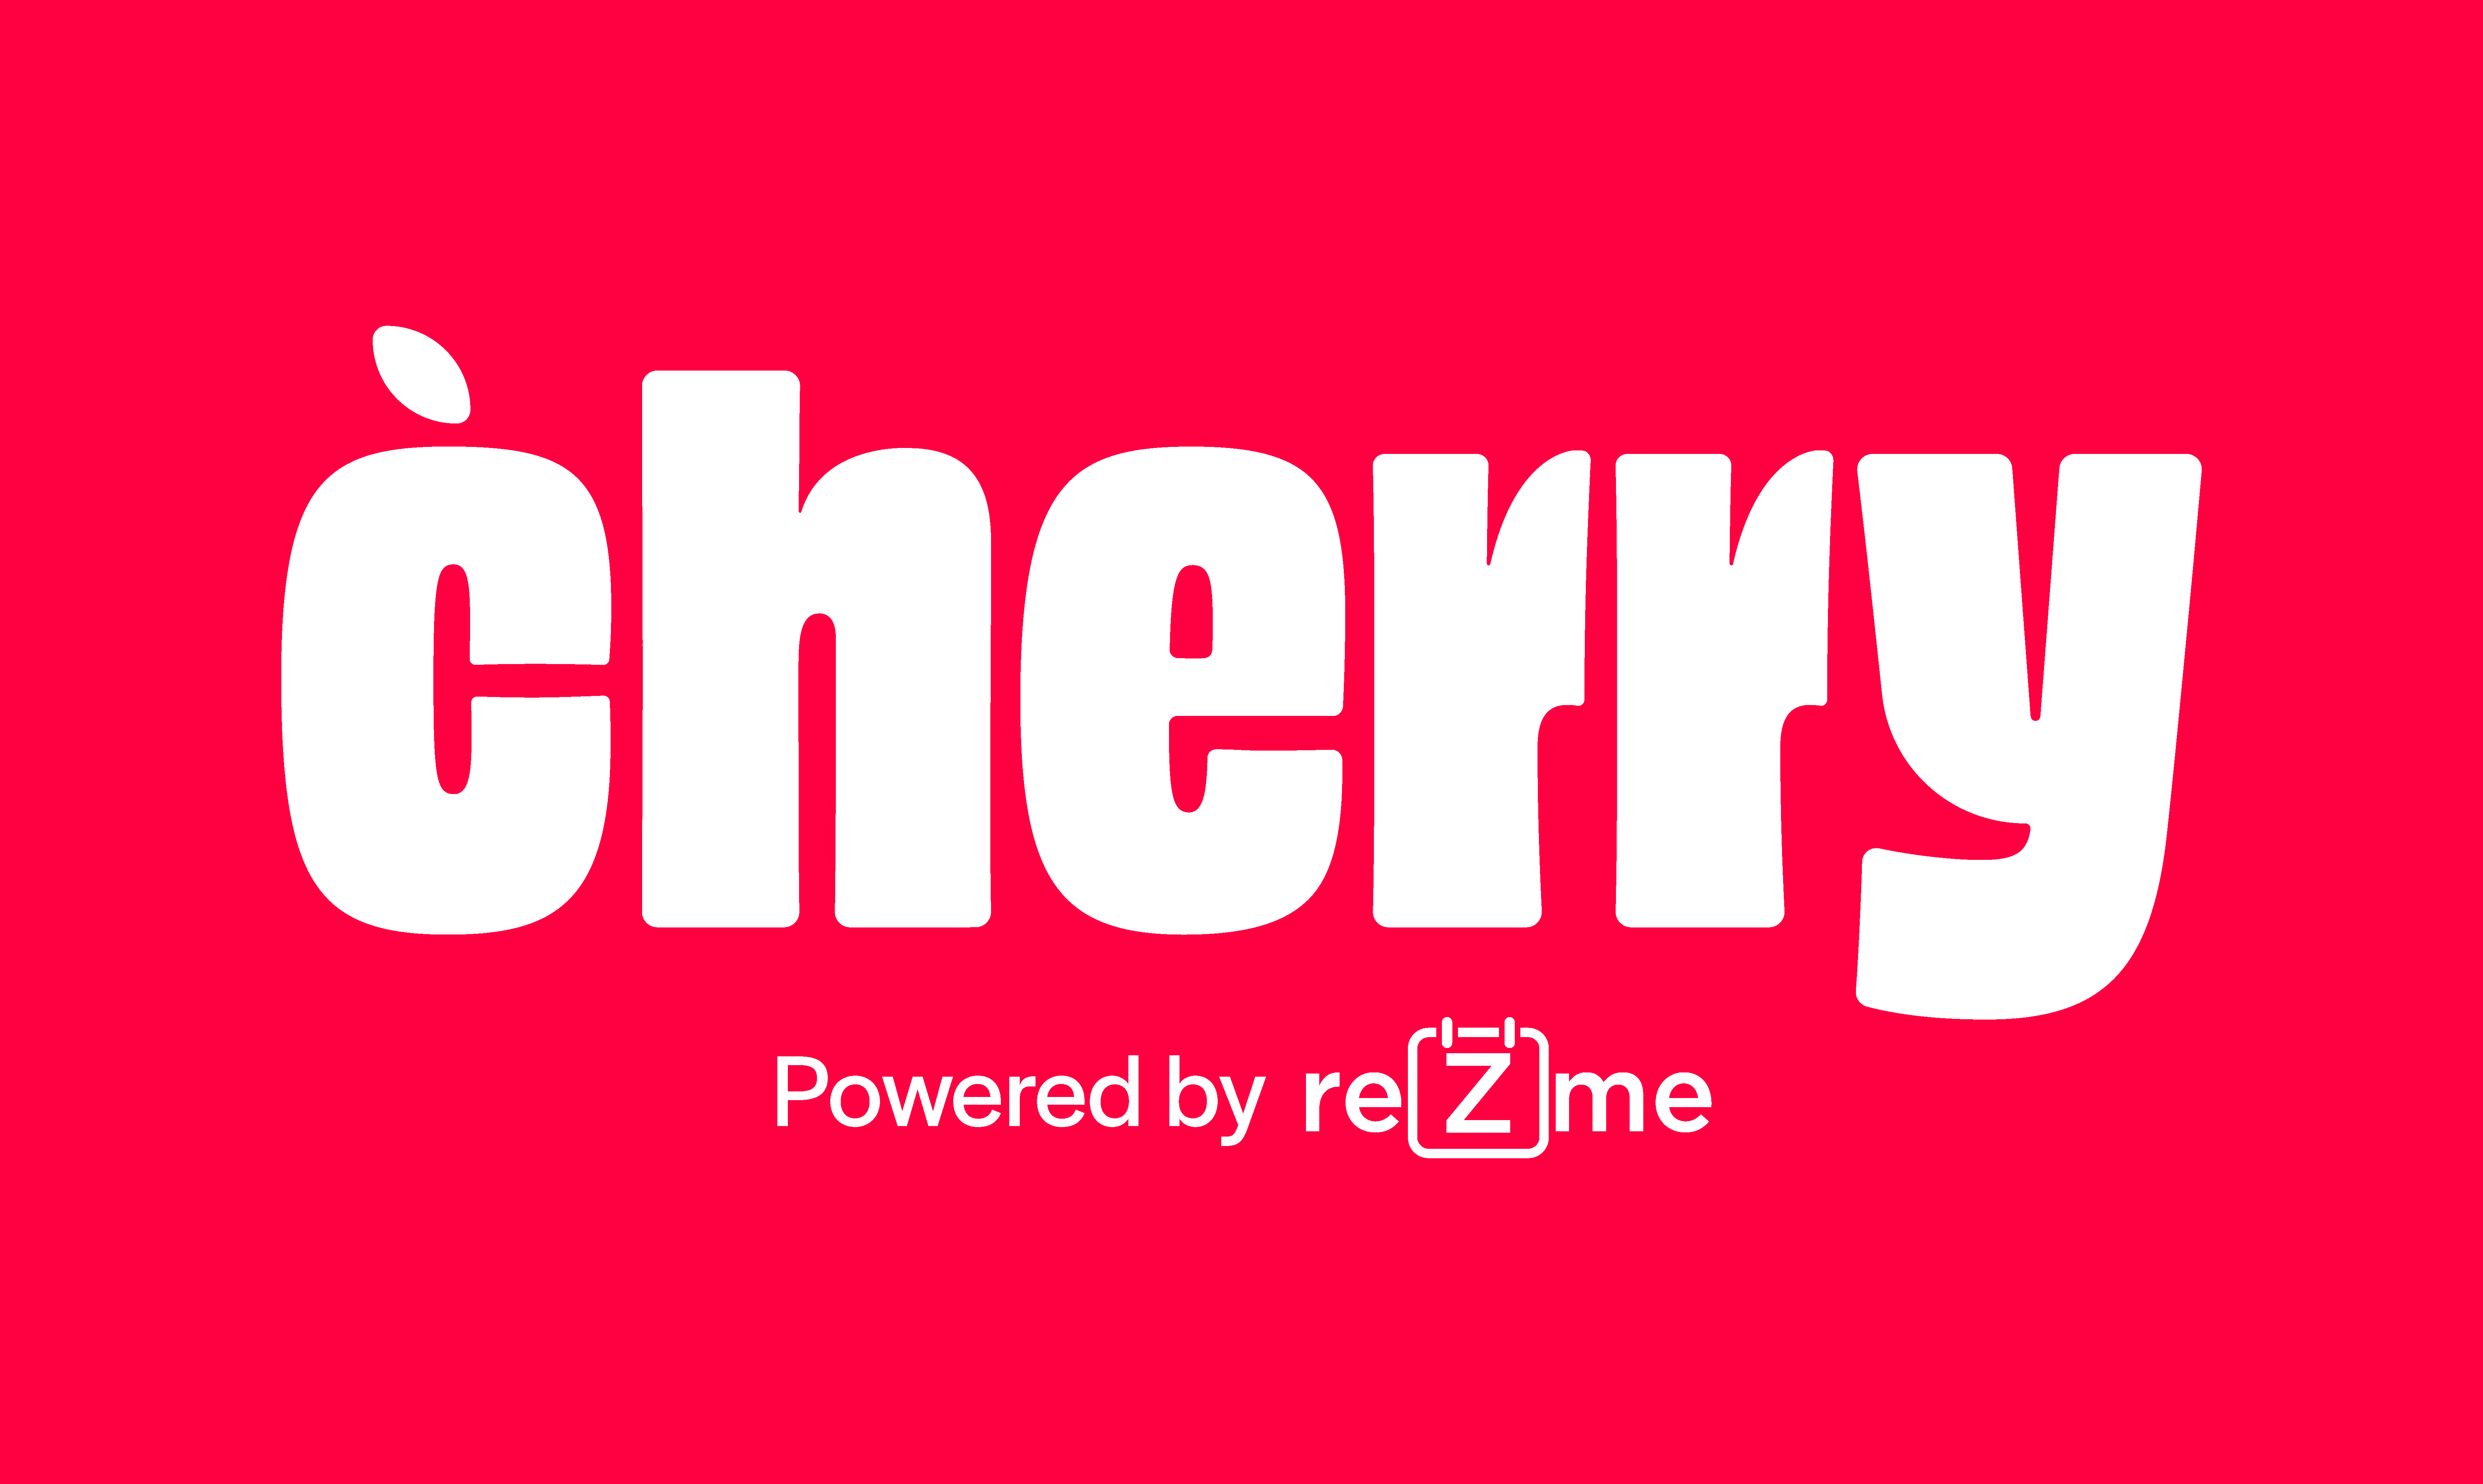 Cherry by reZme